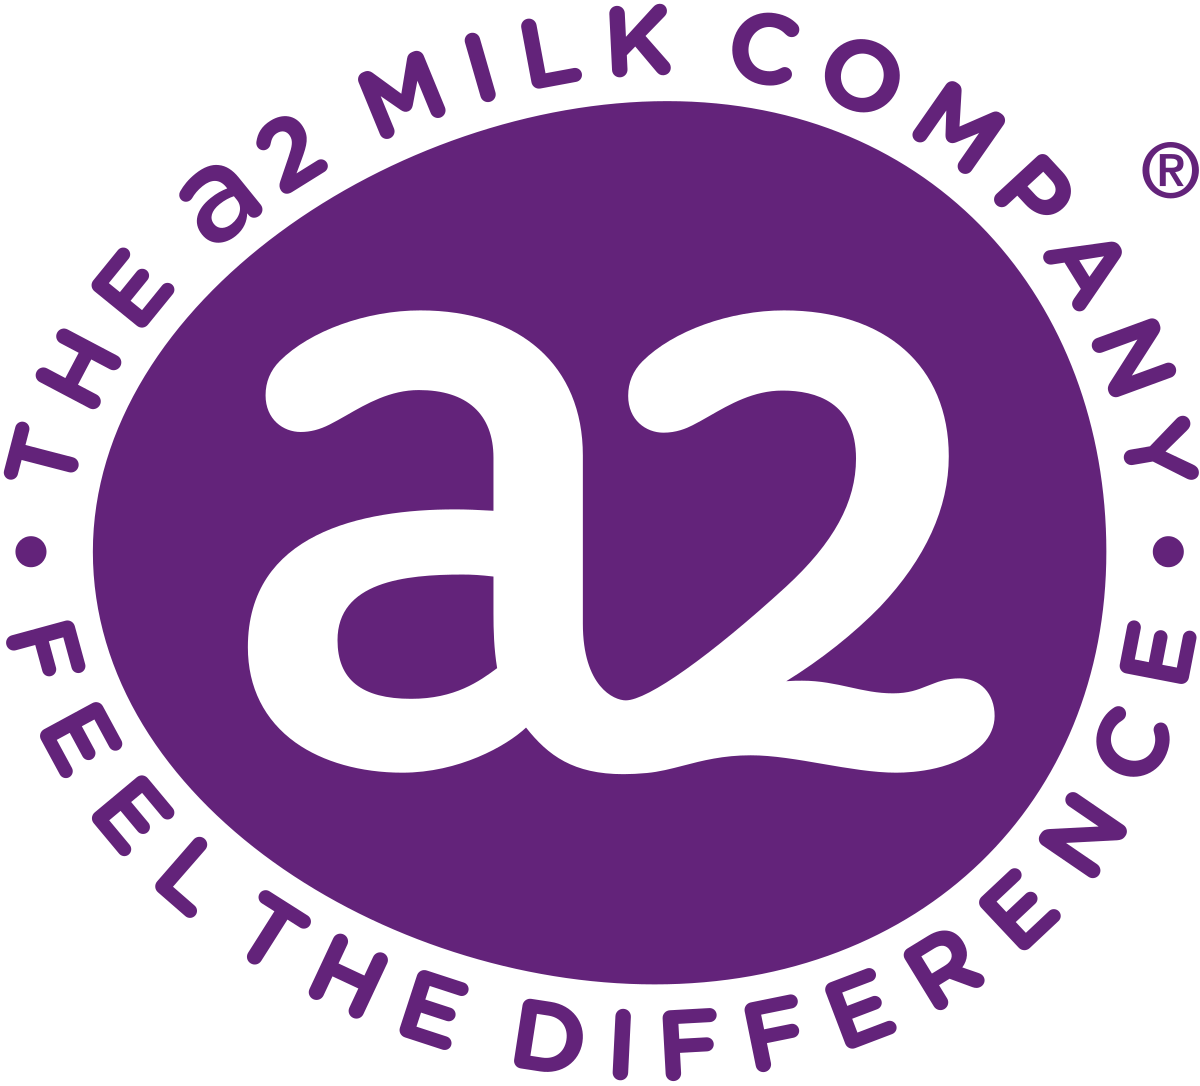 the a2 Milk Company